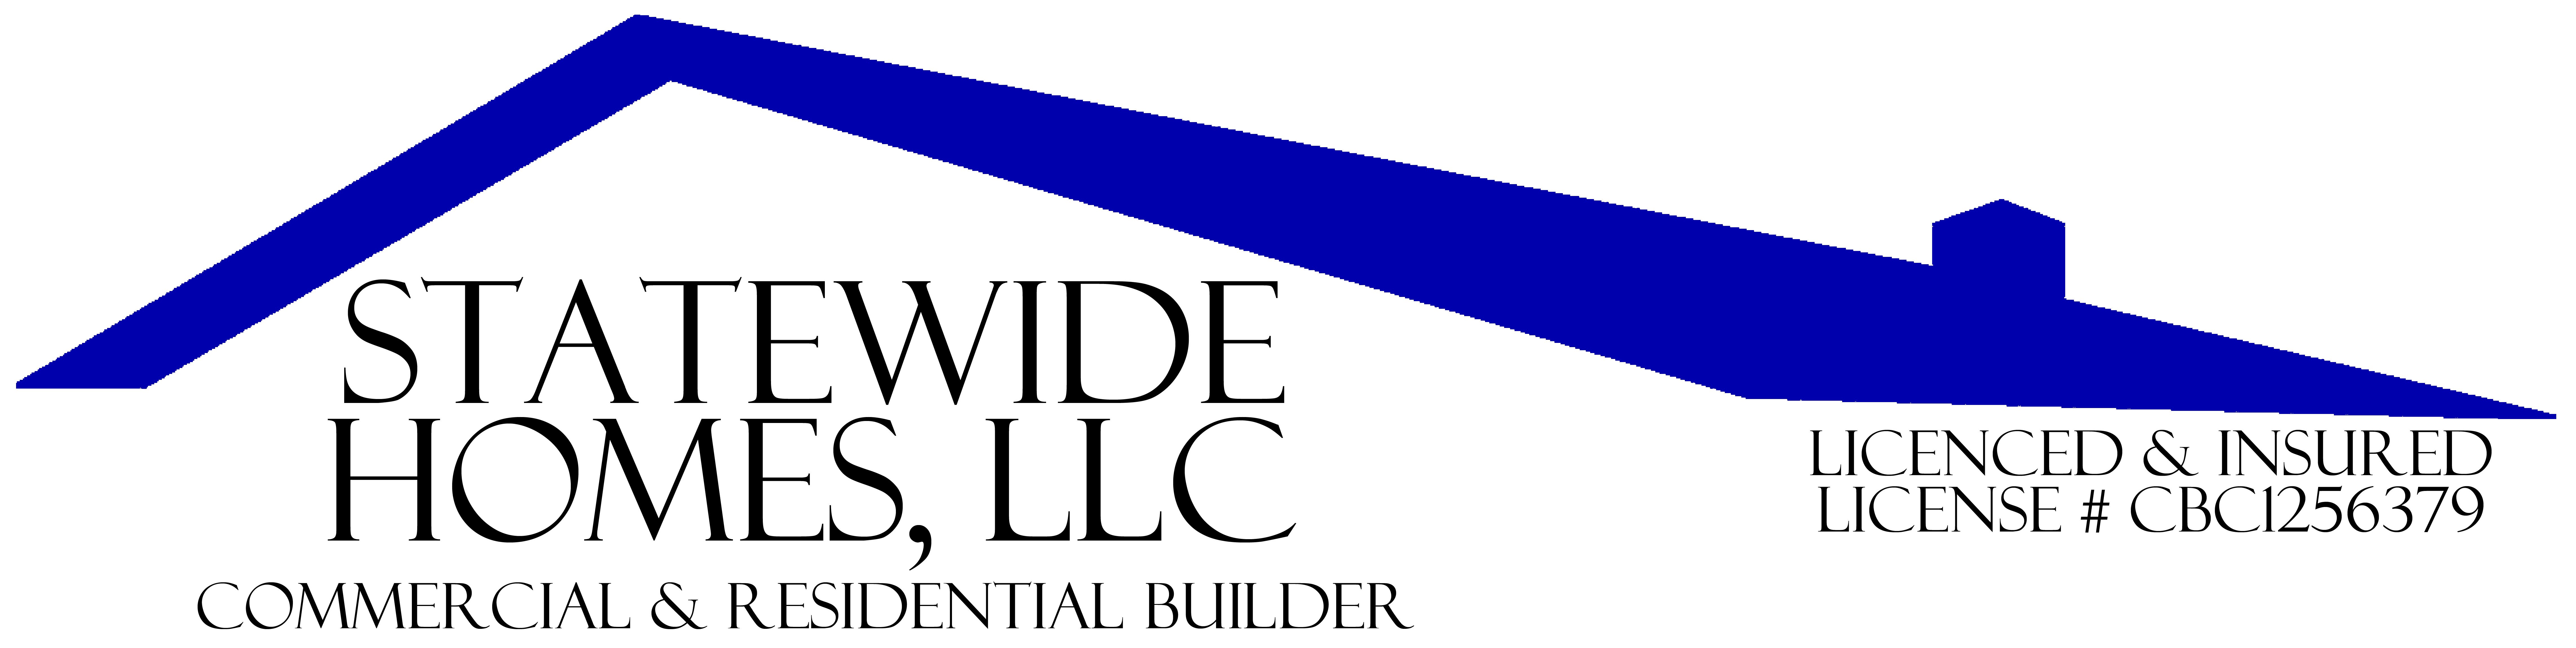 Statewide Homes, LLC Logo